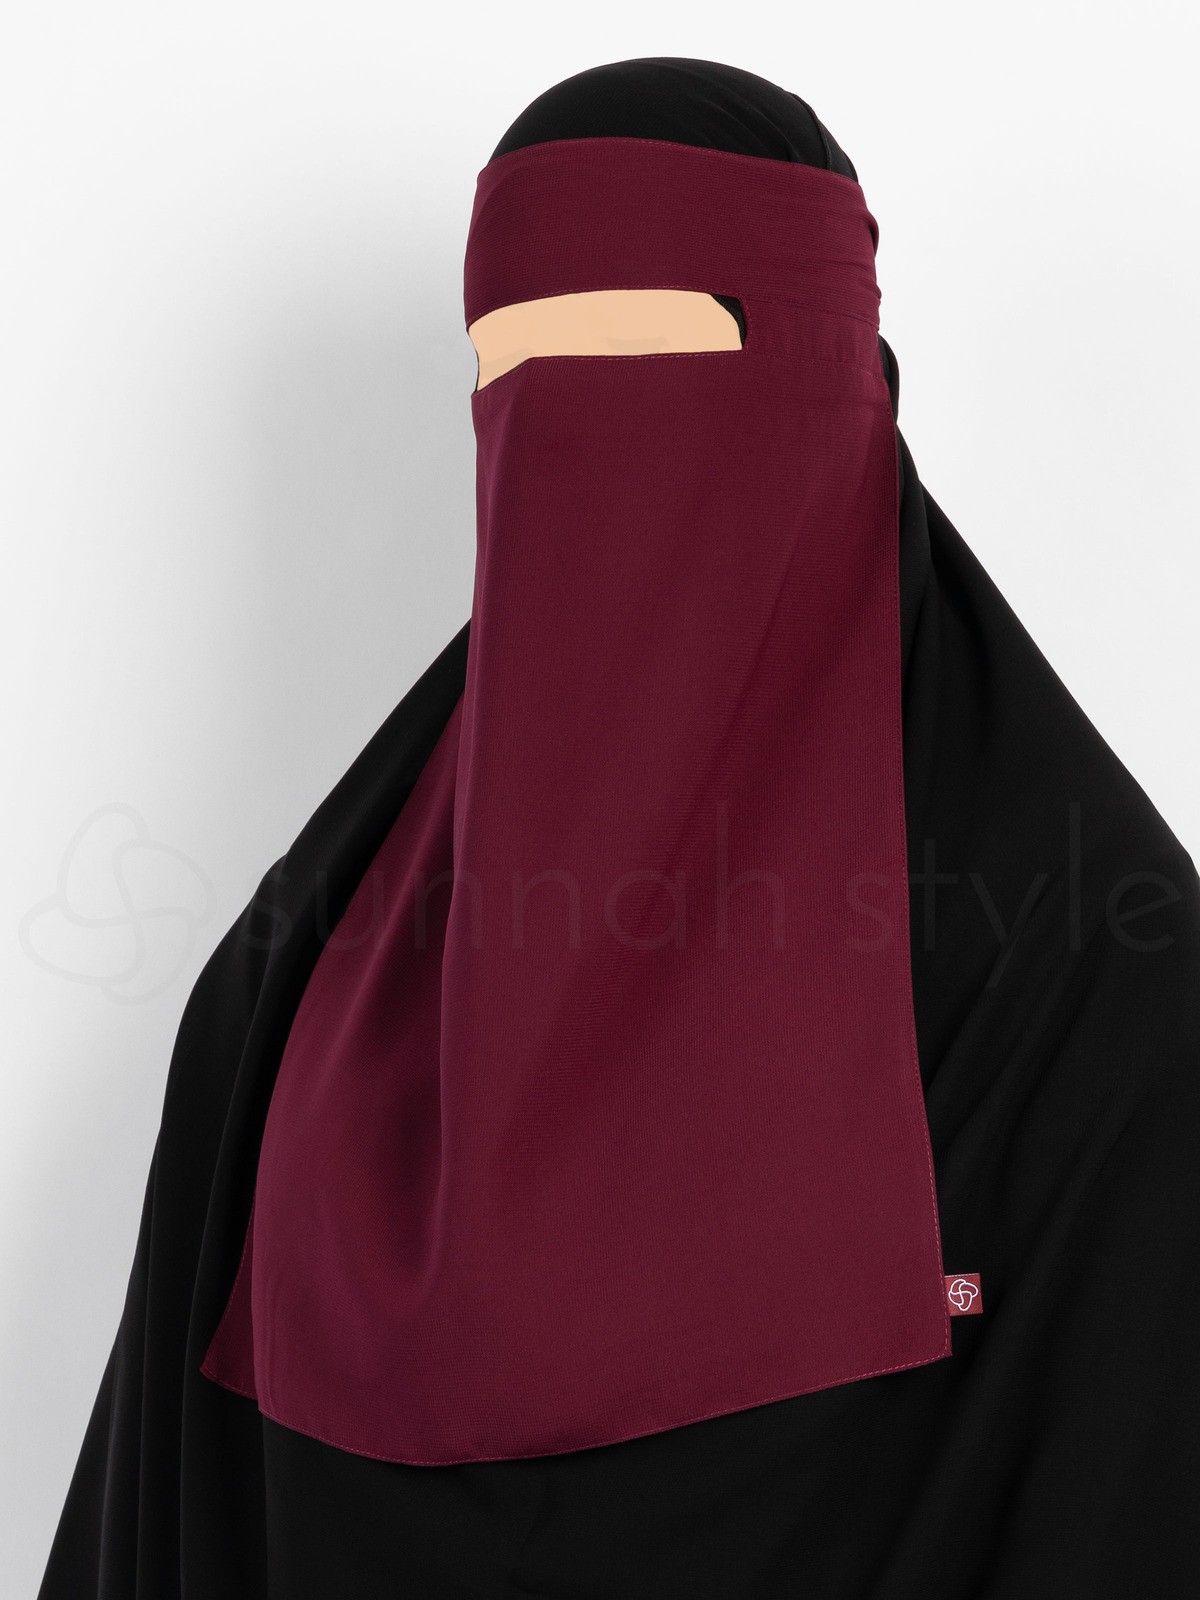 Sunnah Style - No-Pinch One Layer Niqab (Burgundy)